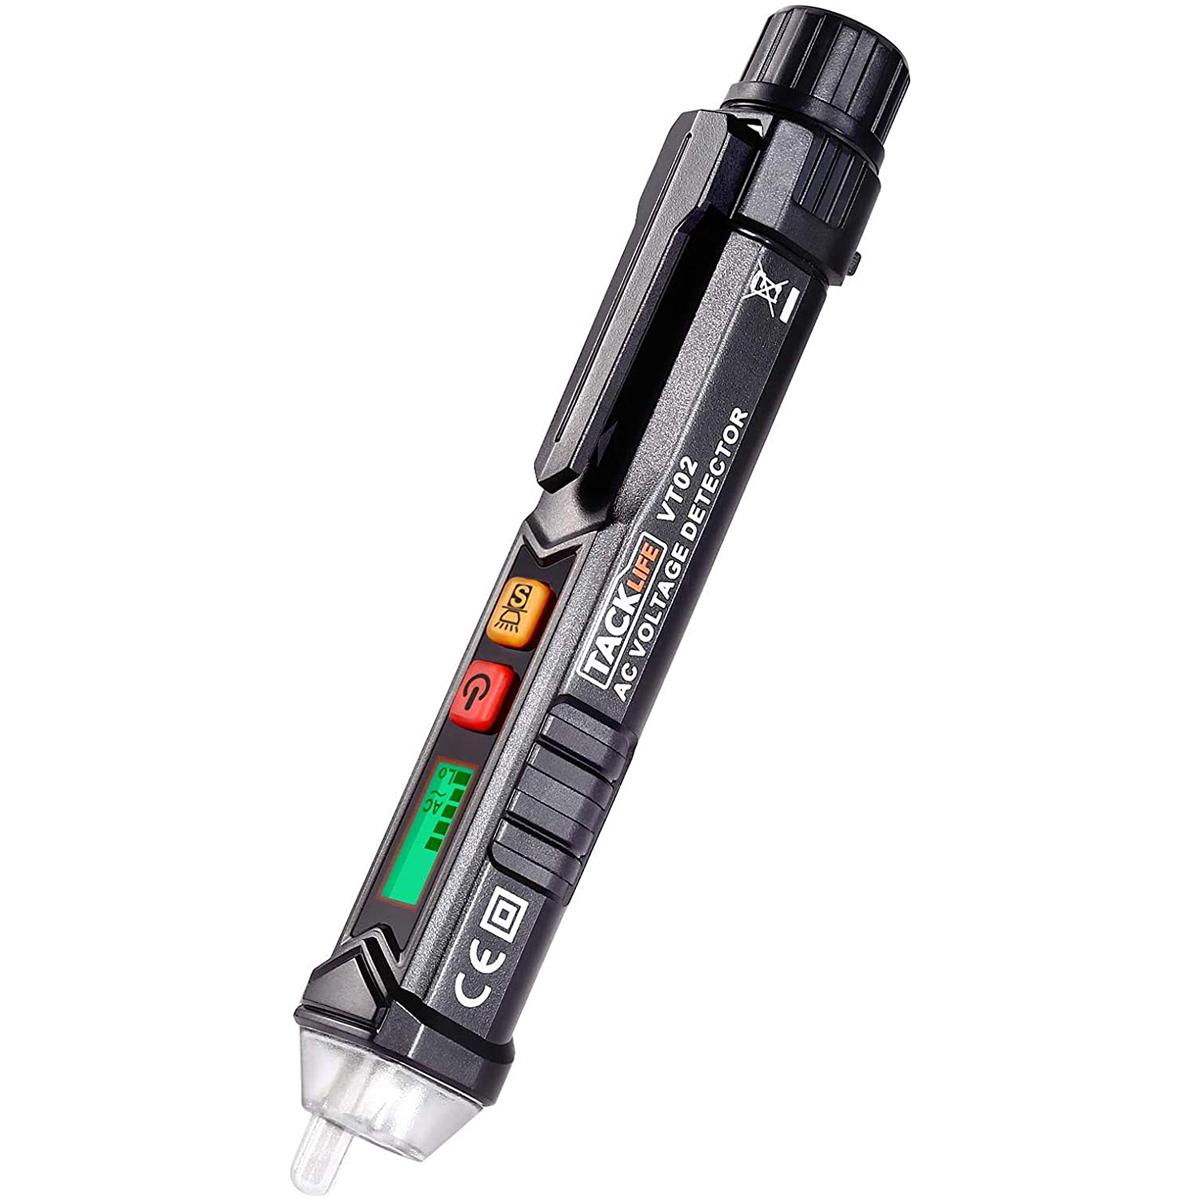 Non-Contact AC Voltage Tester Voltage Tester Pen for $9.76